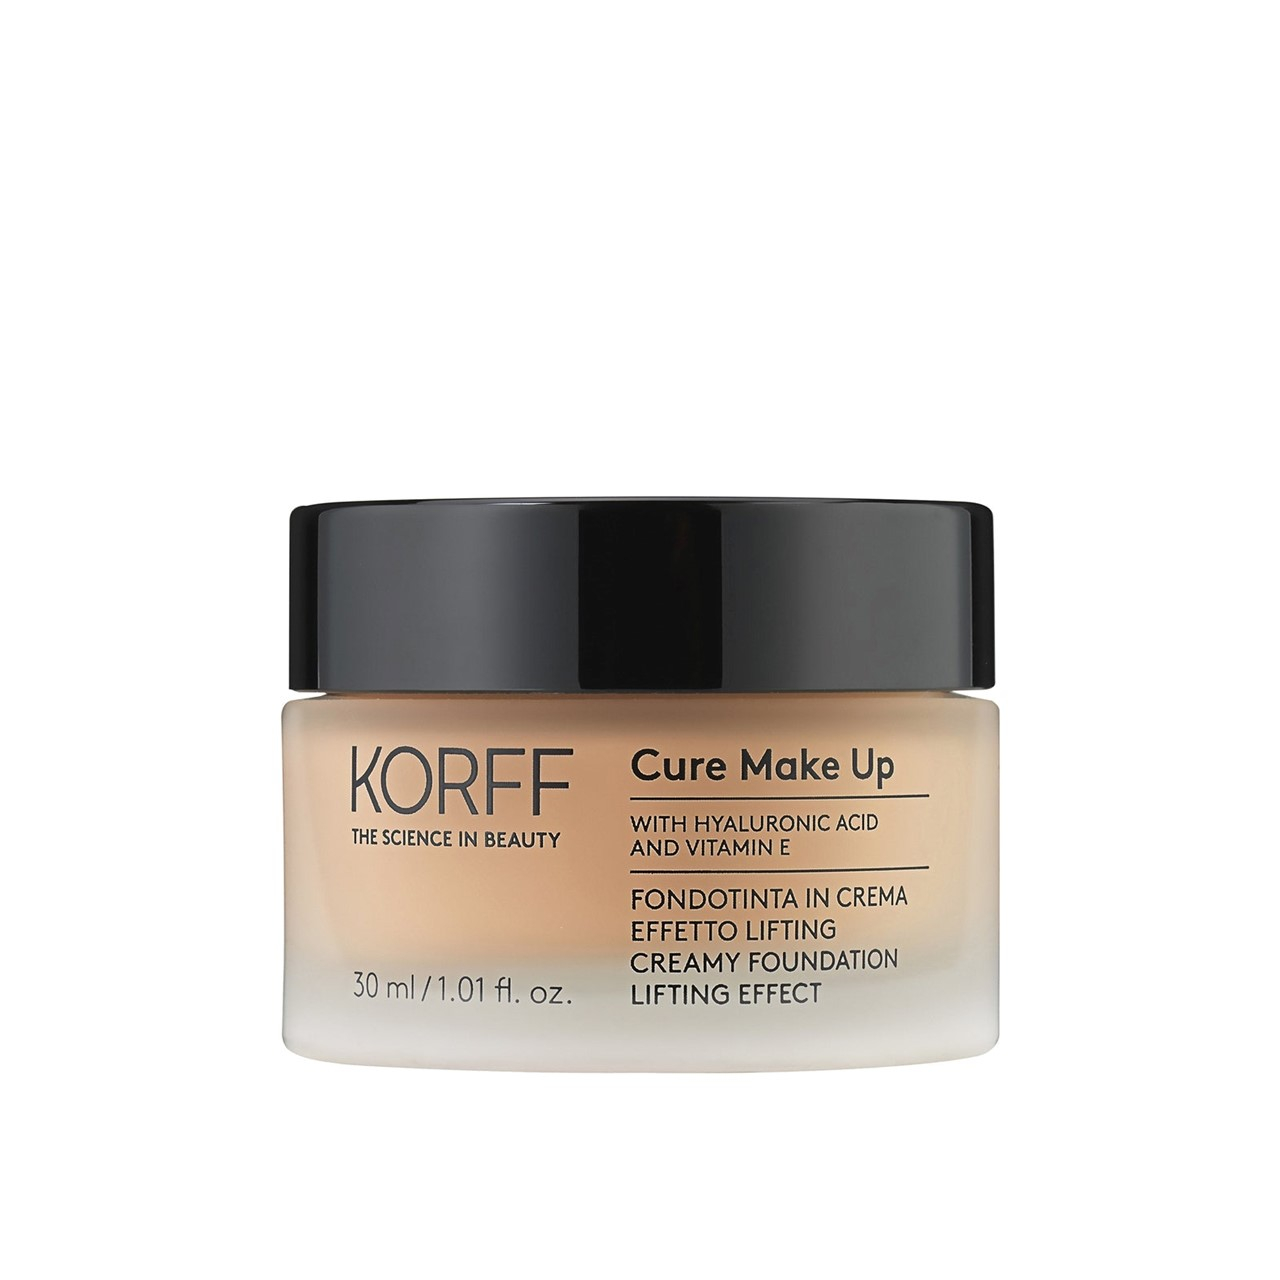 Korff Cure Make-Up Creamy Foundation Lifting Effect 05 30ml